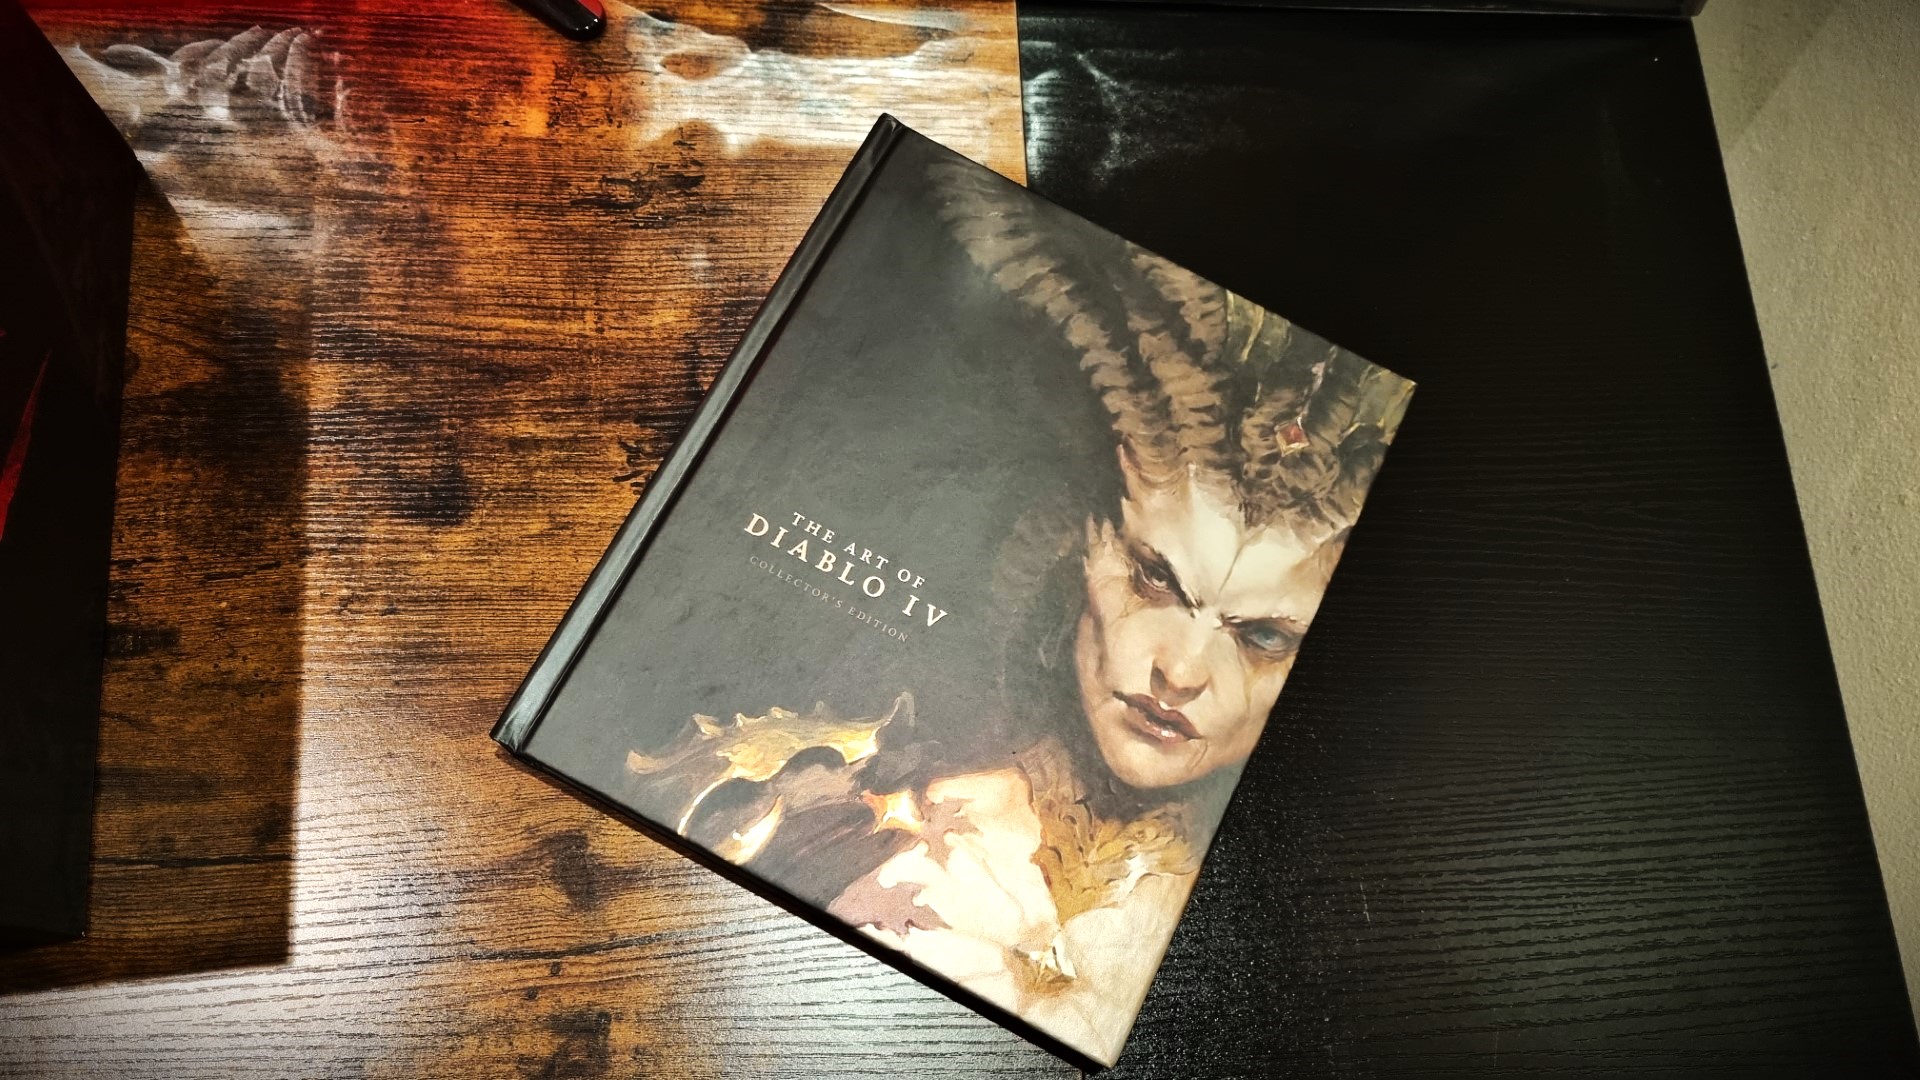 The Art of Diablo 4 book